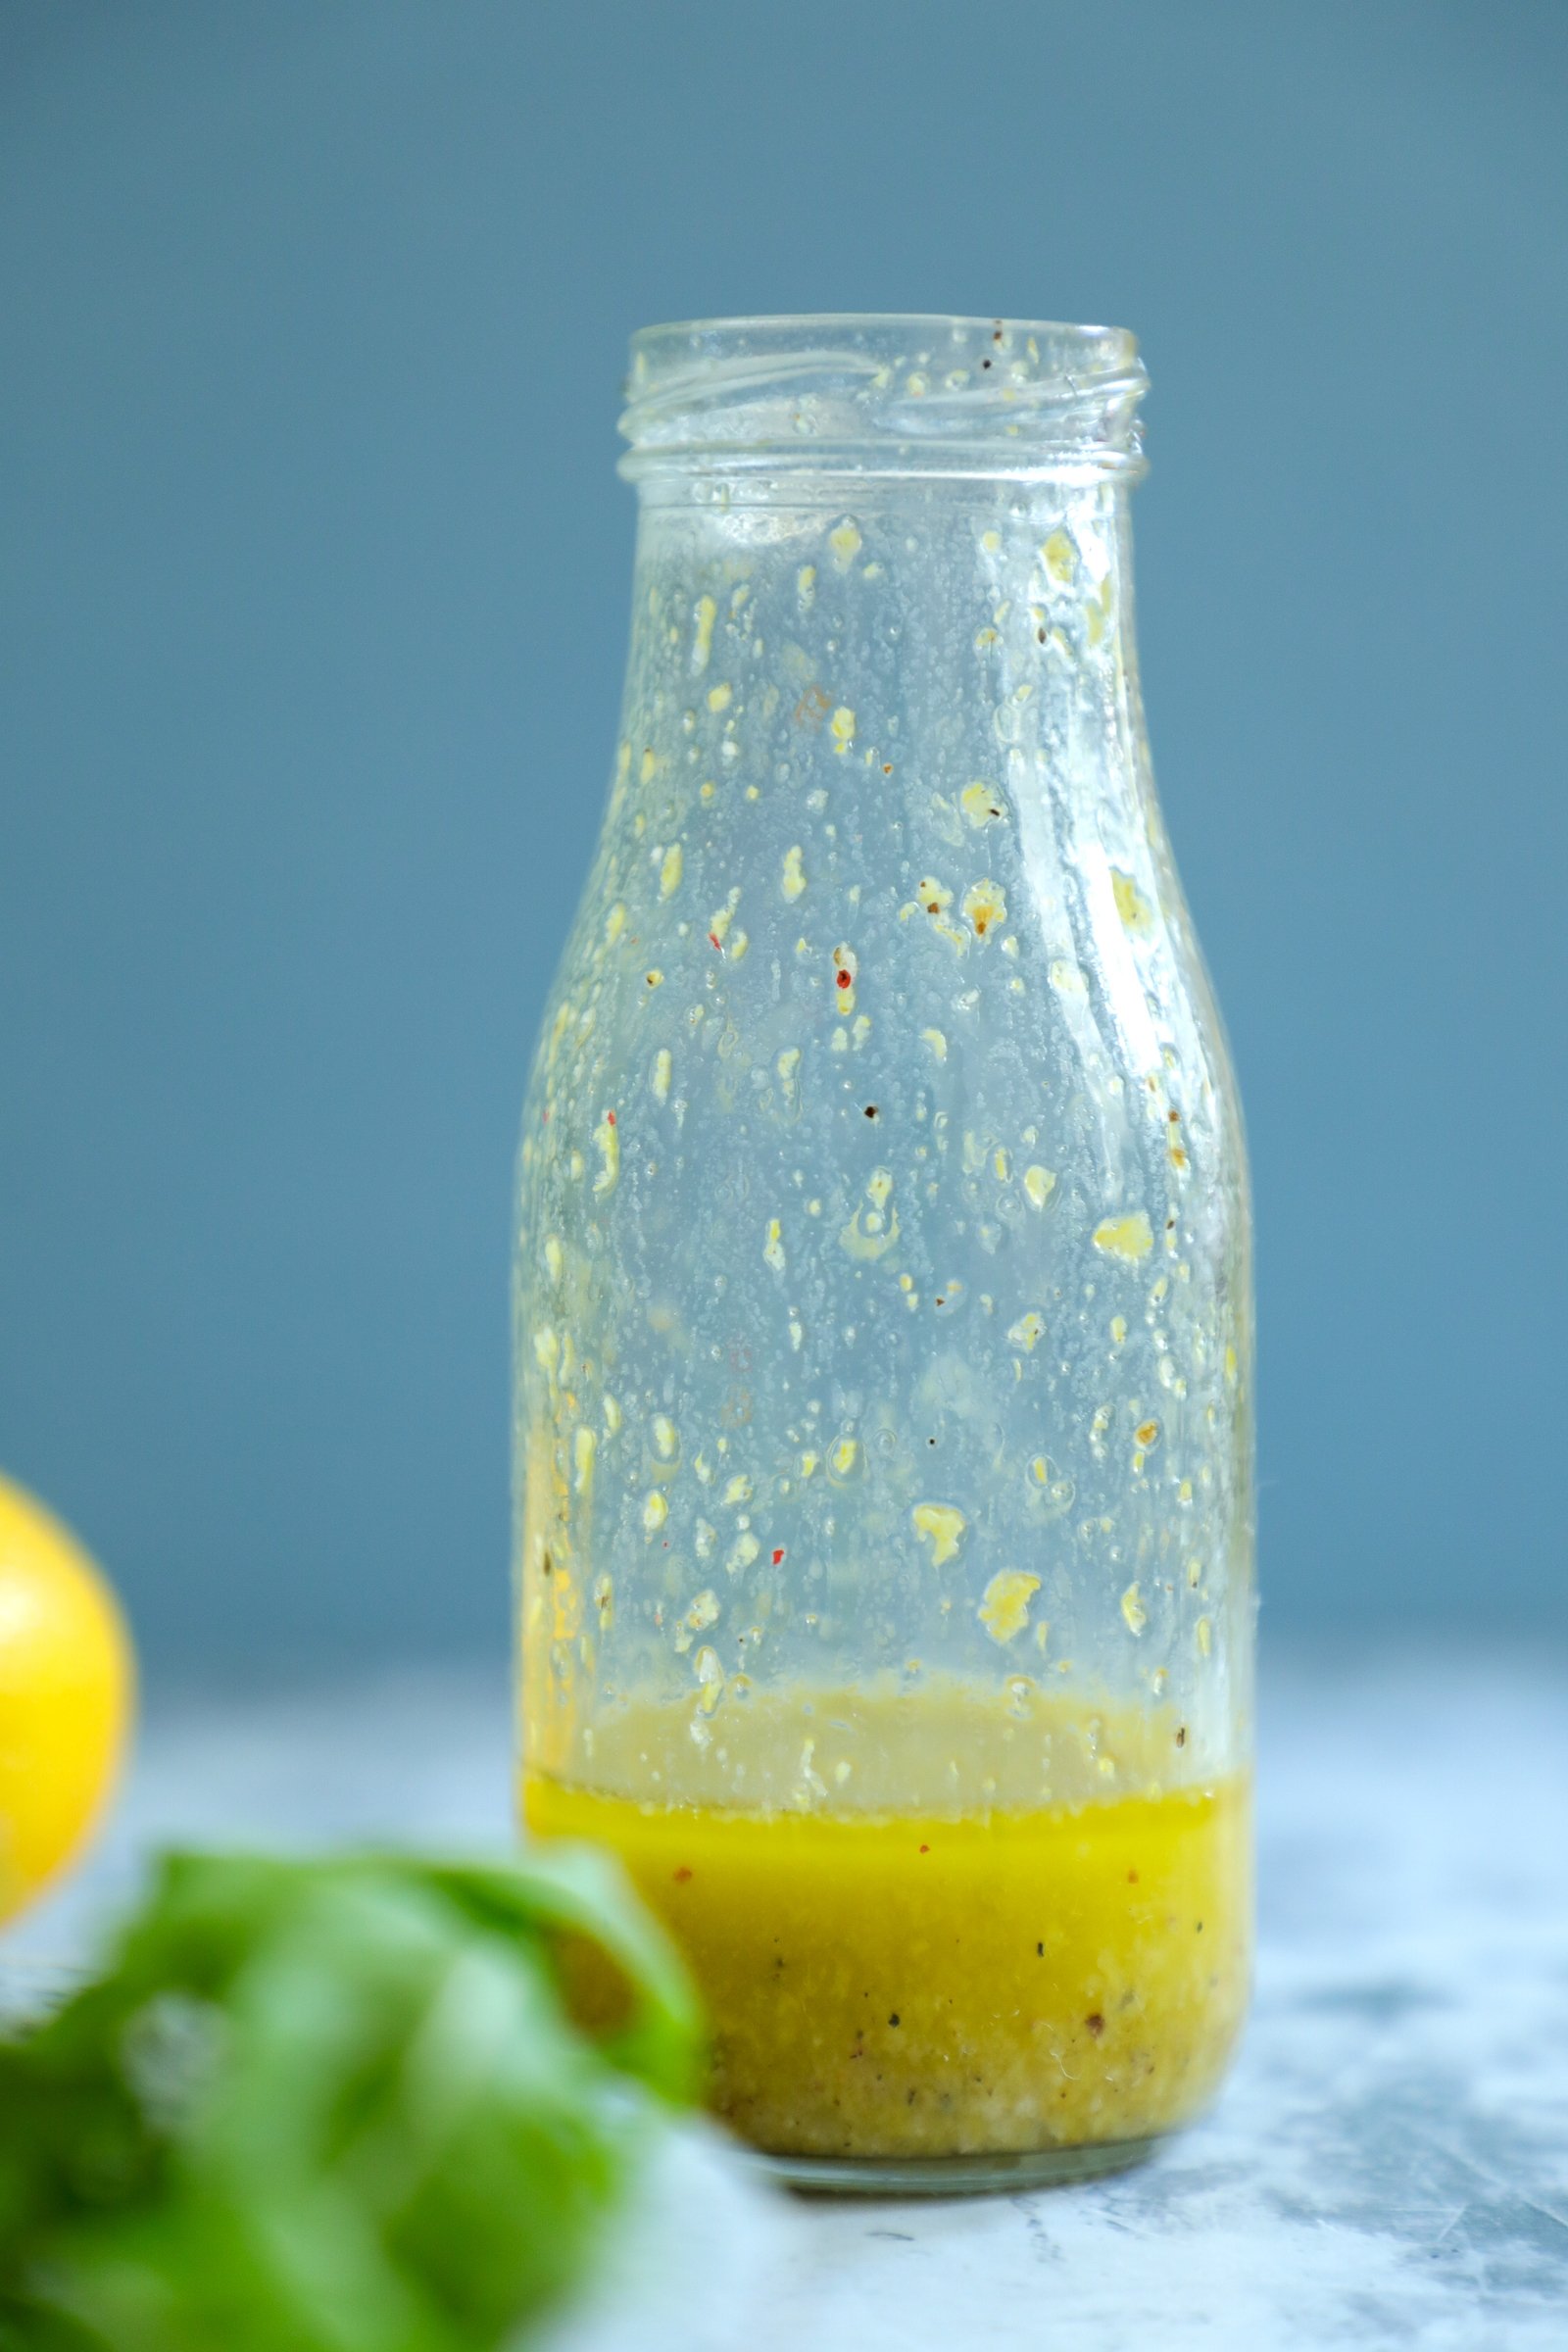 Keto lemon Dressing in a glass jar after shaking